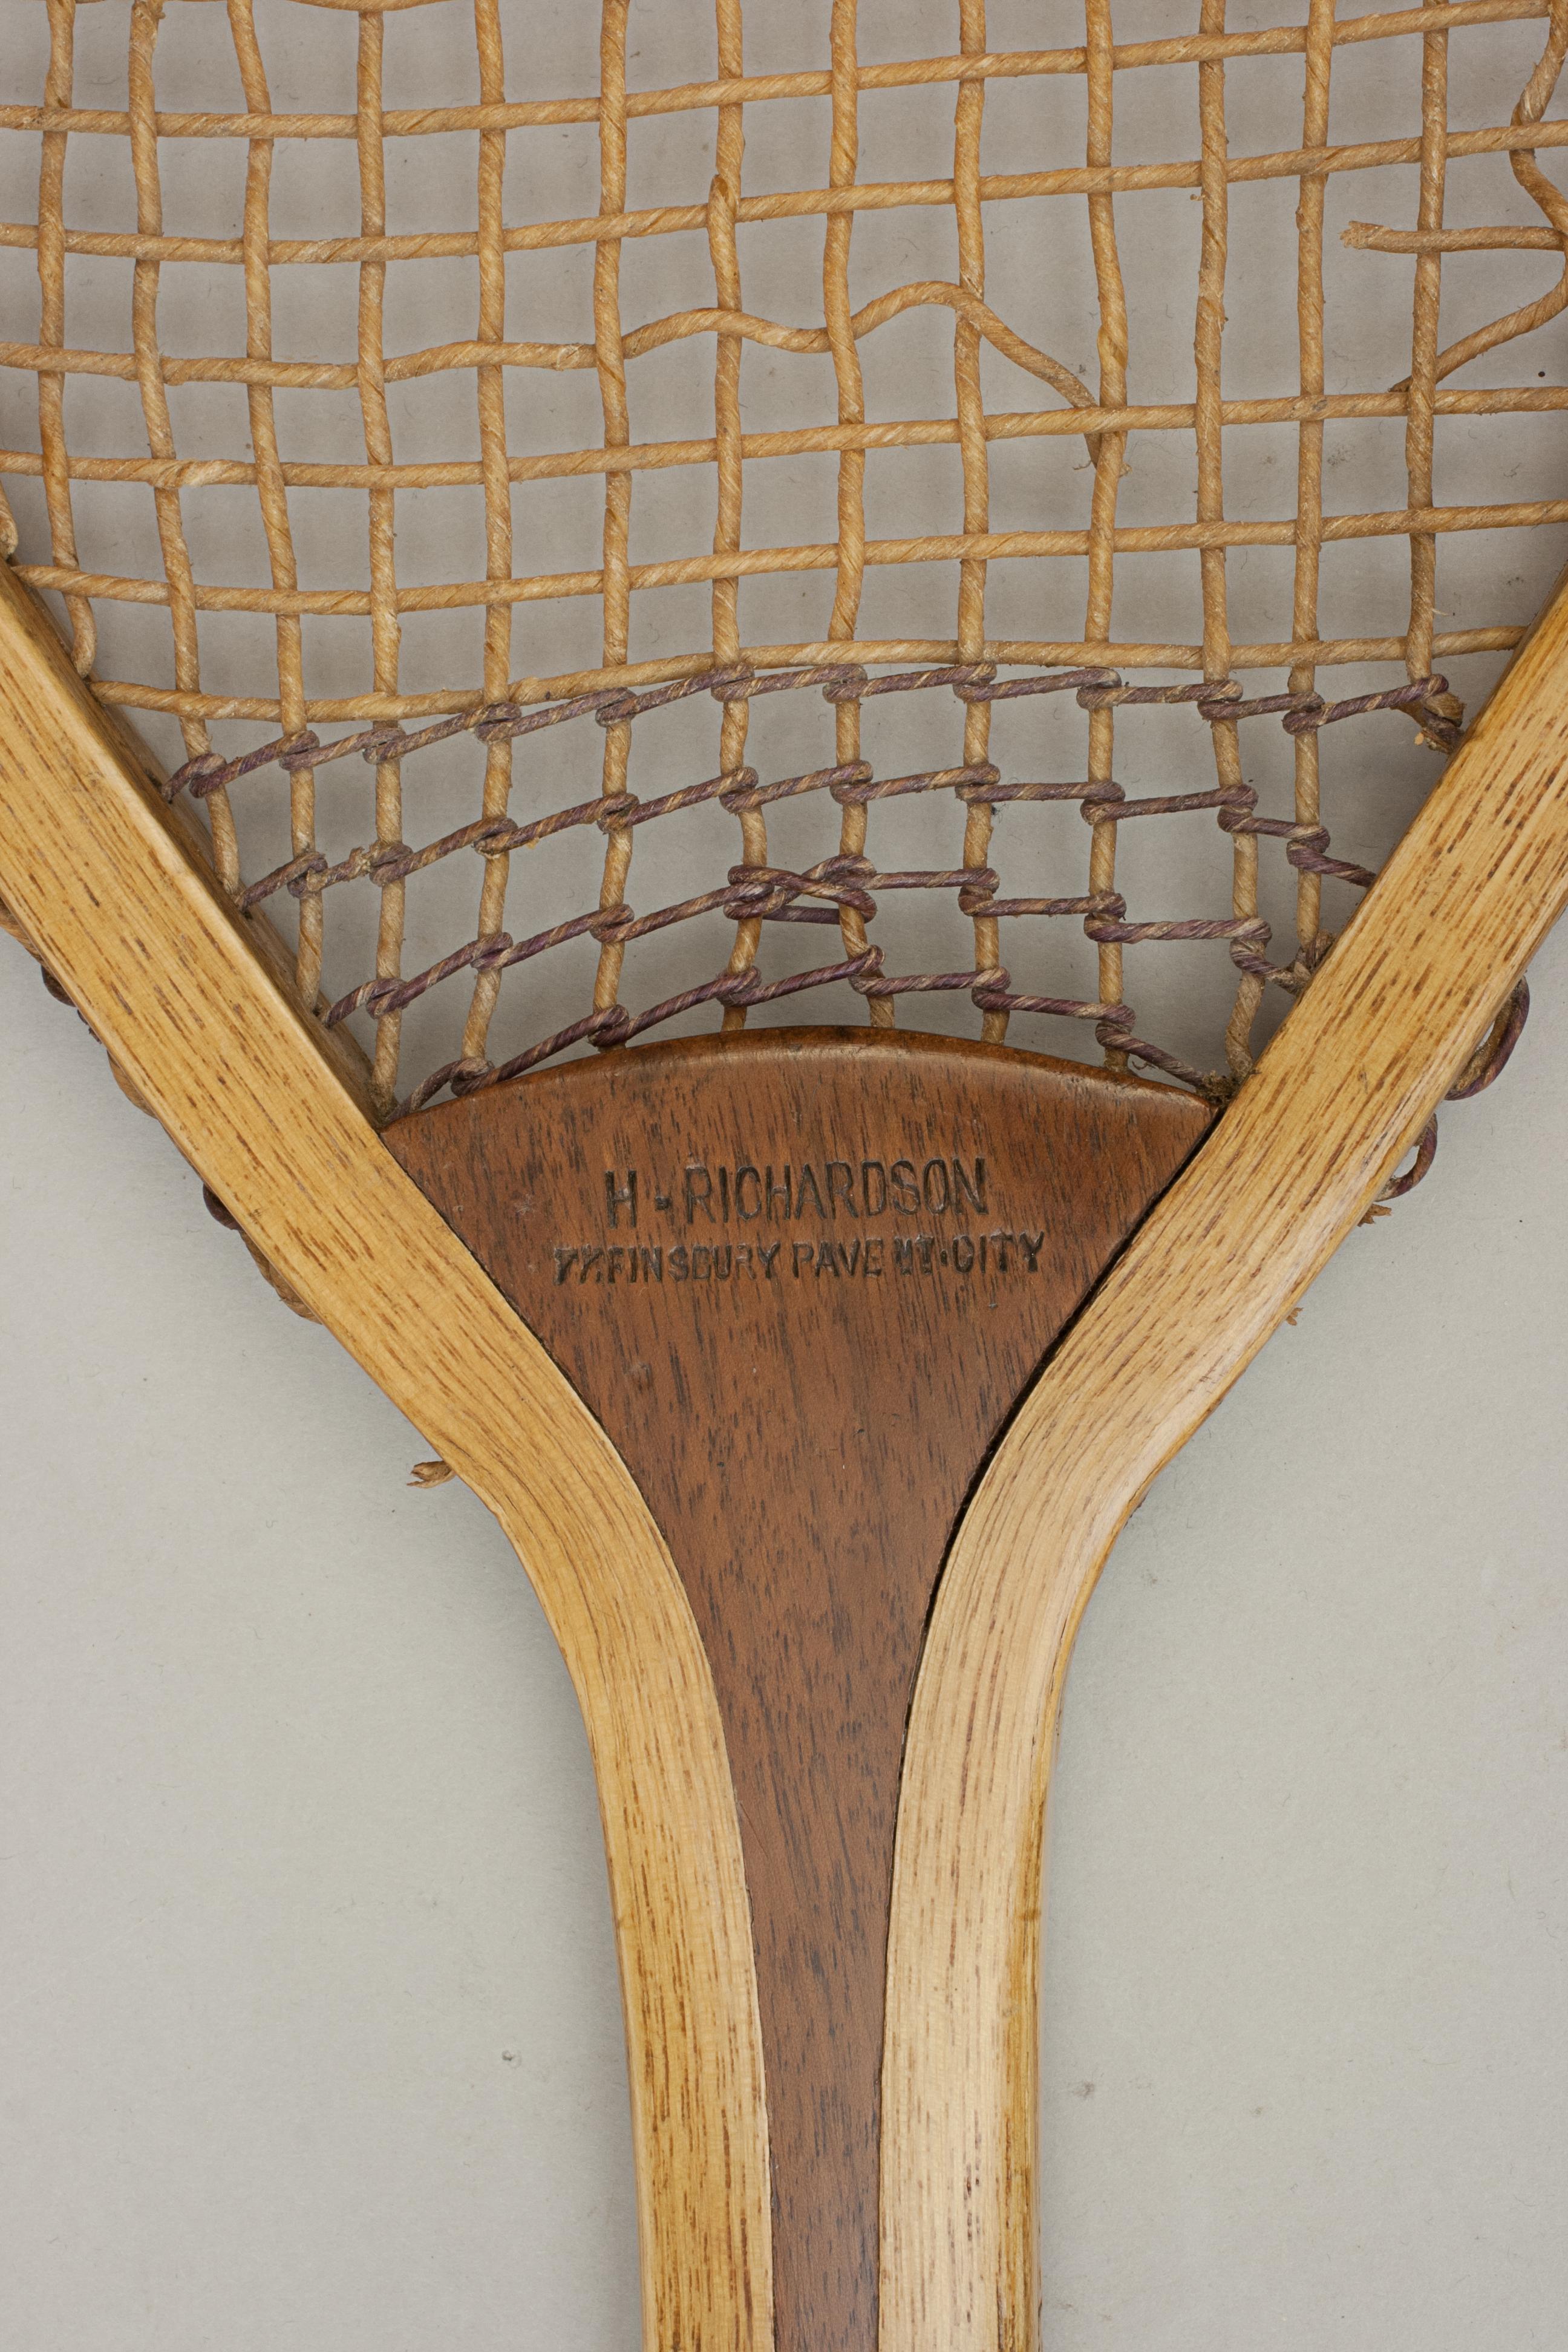 Ash Pair of Early H. Richardson Lawn Tennis Rackets